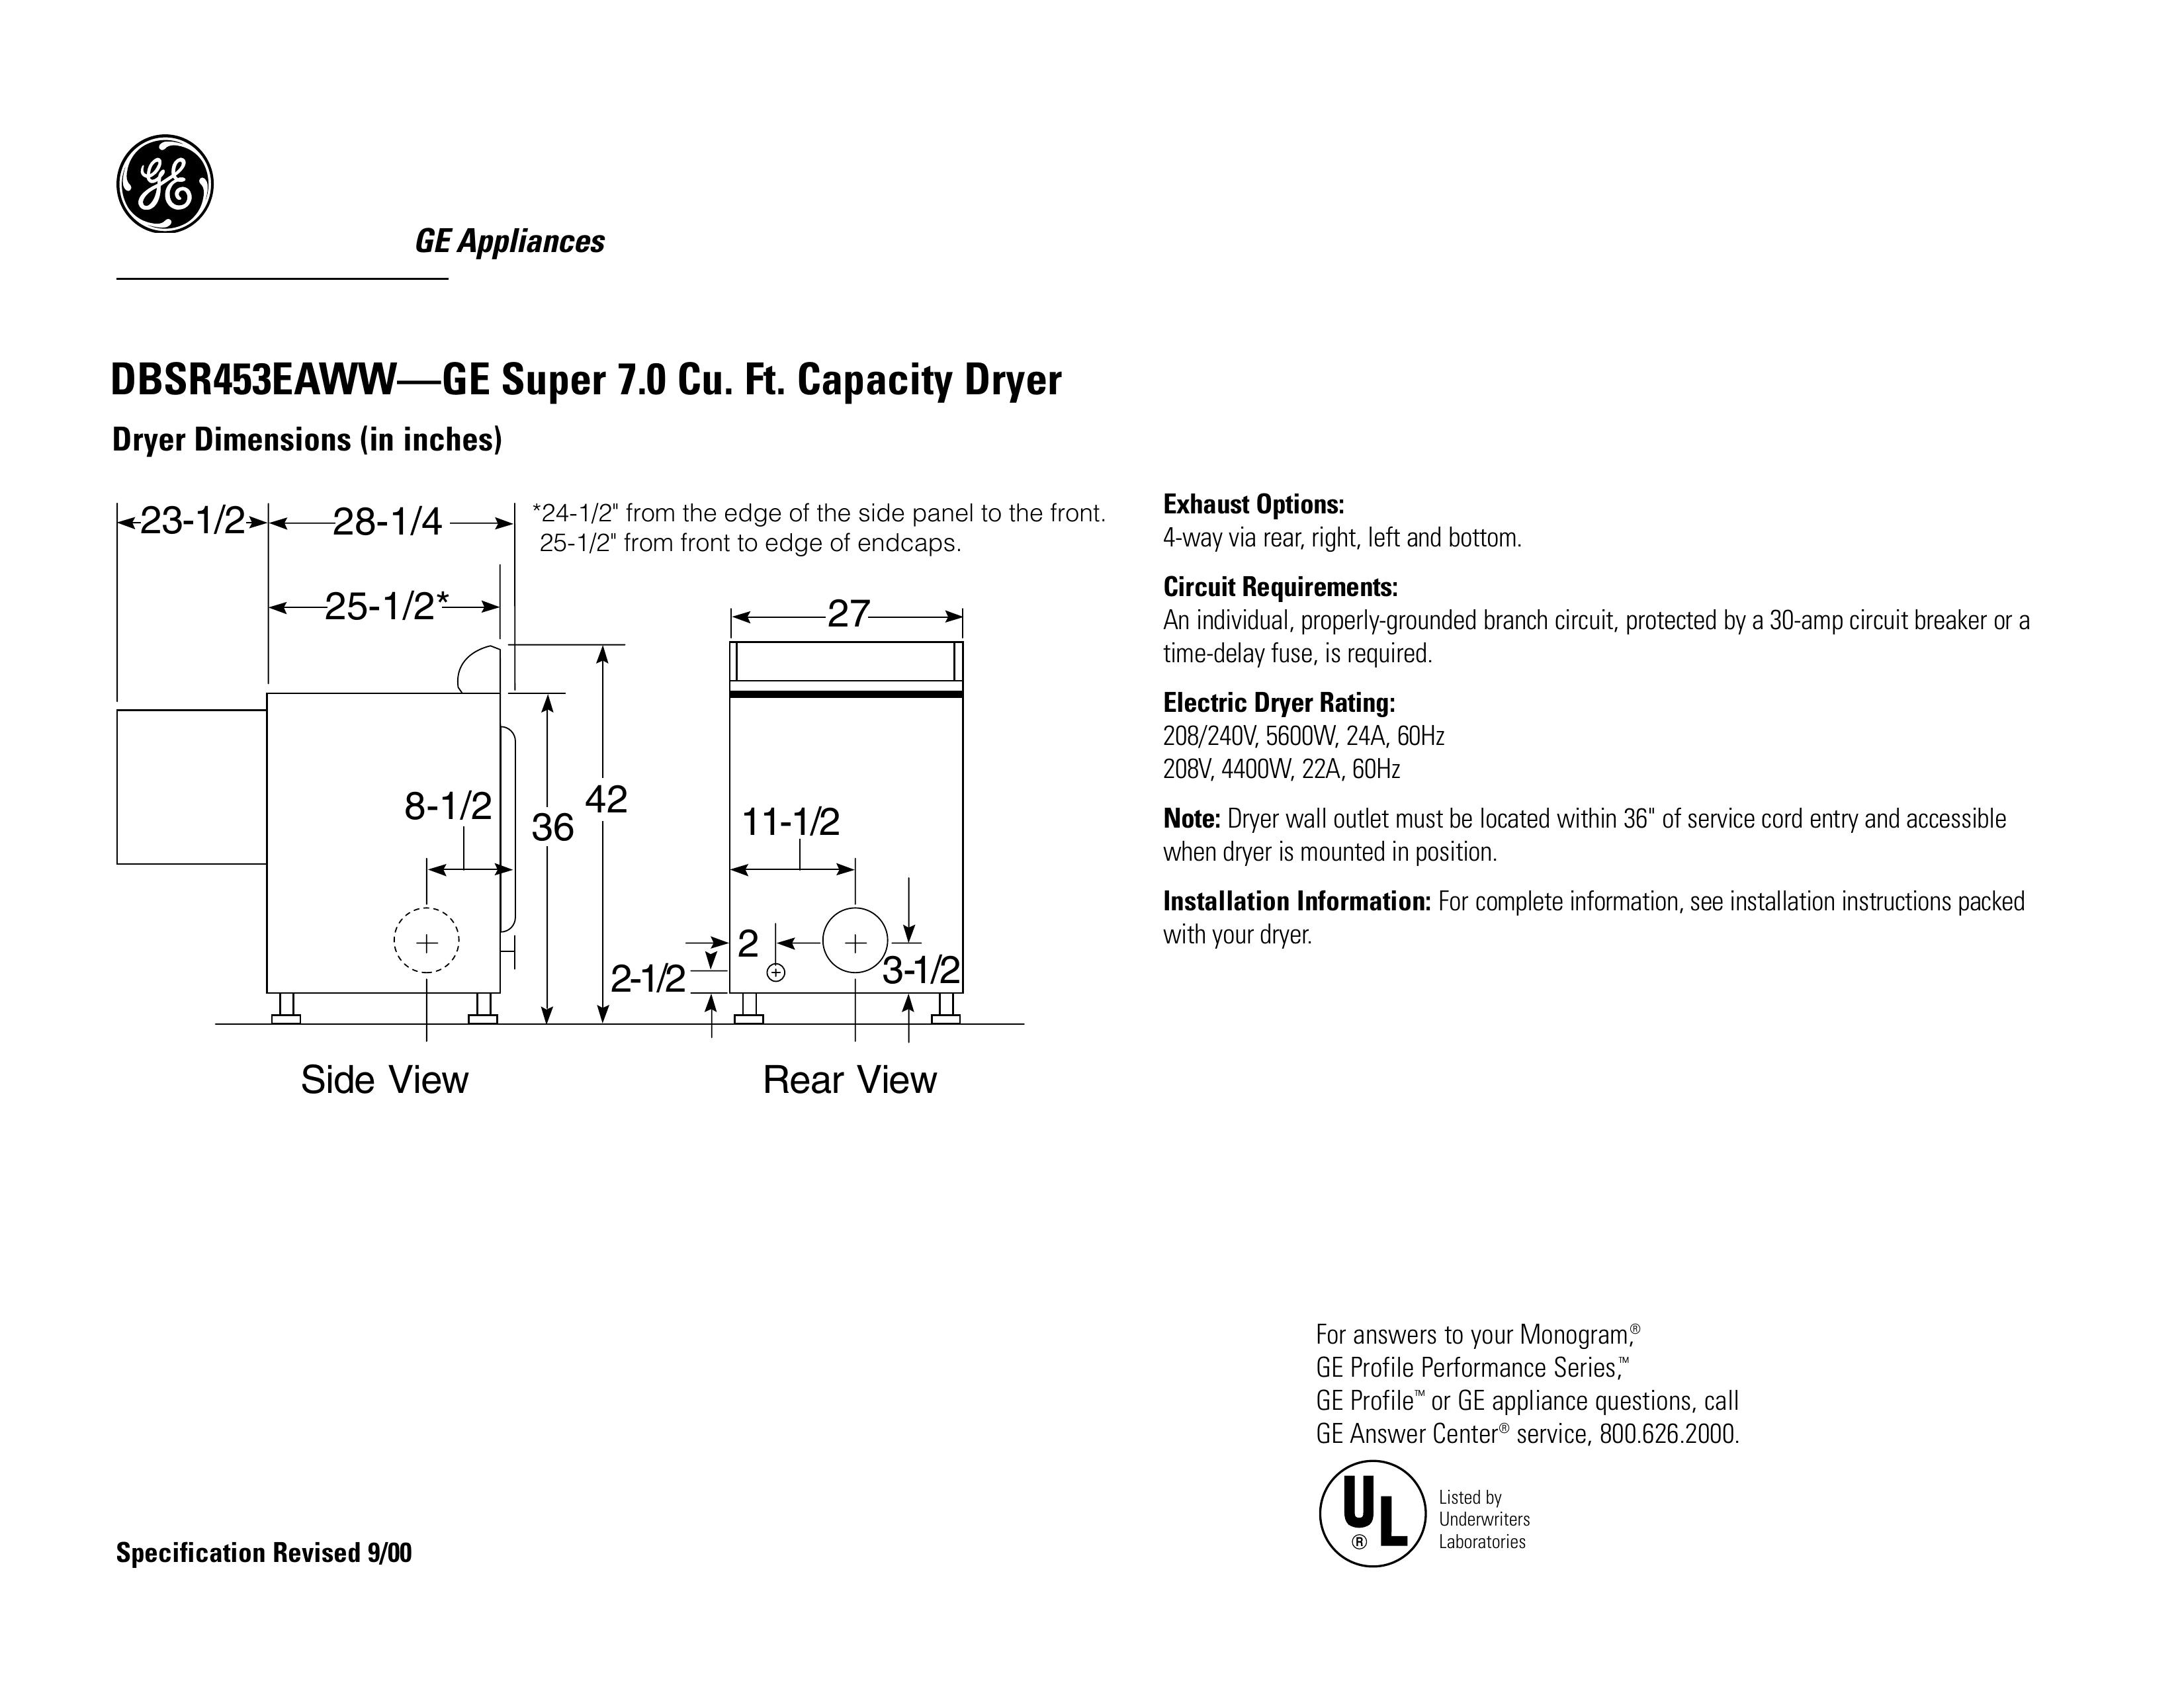 GE DBSR453EAAA Clothes Dryer User Manual